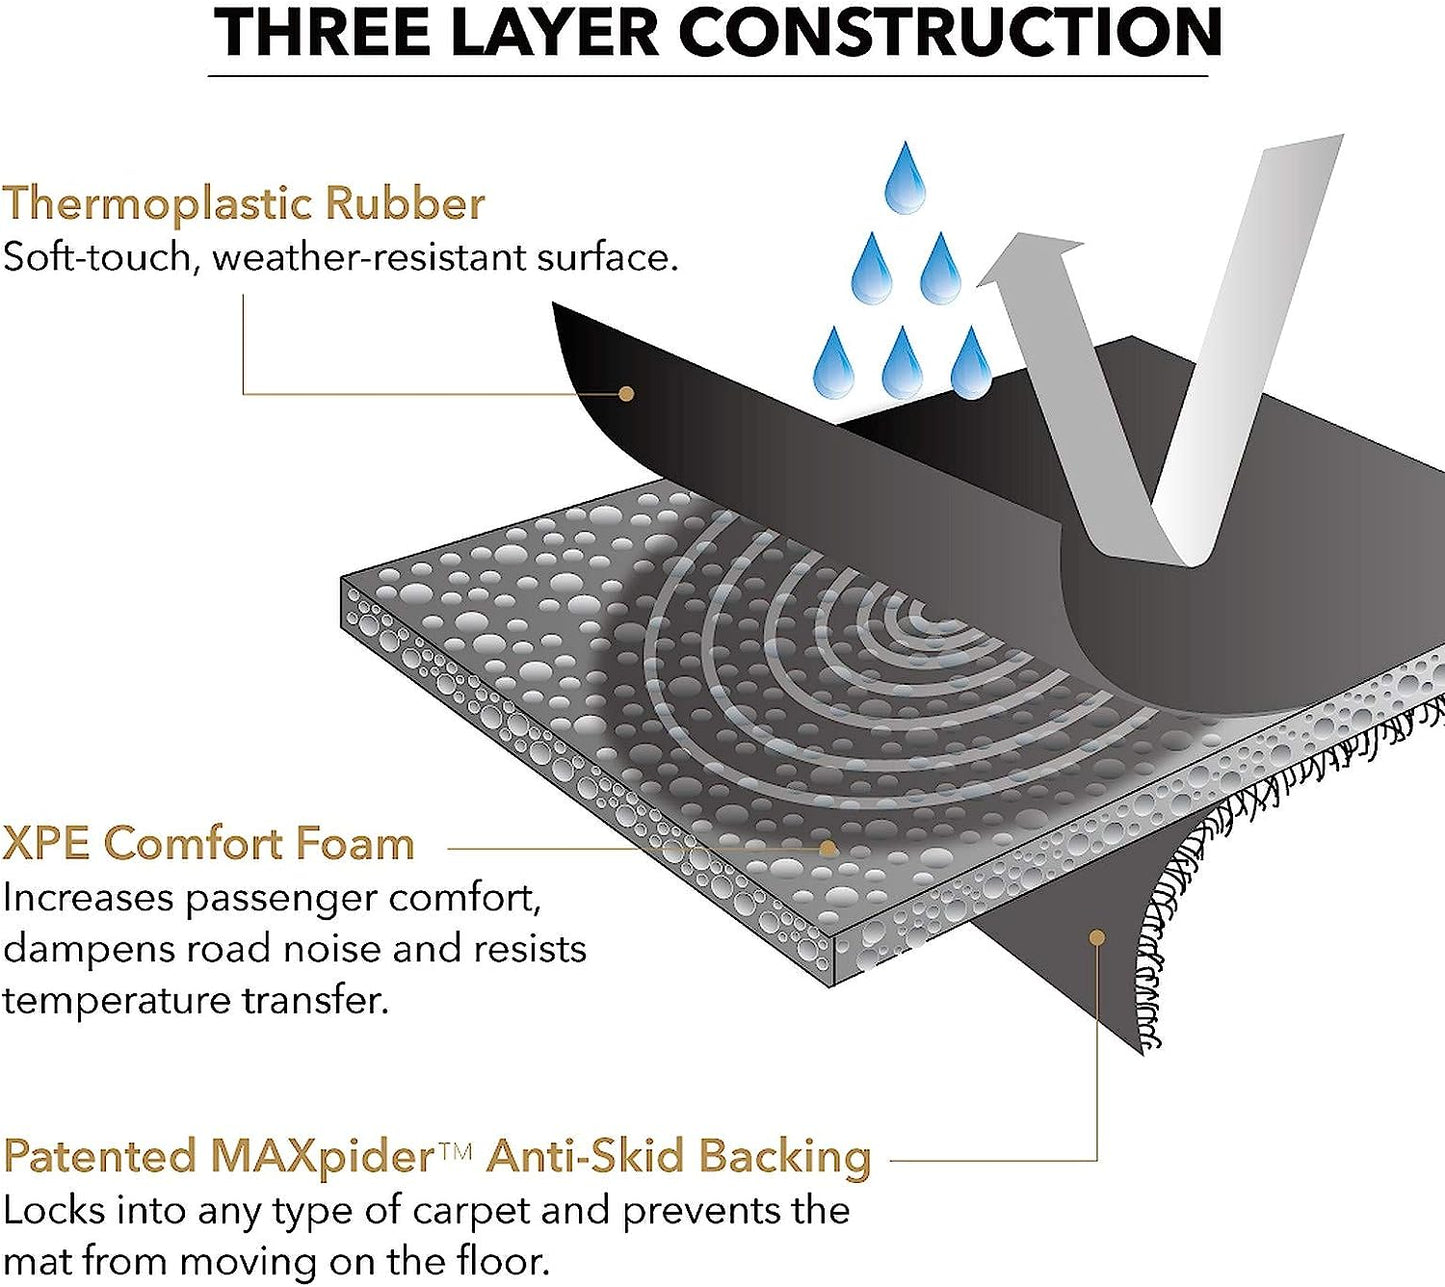 3D MAXpider Custom Fit Floor Liner Black for 2011-2022 INFINITI QX56